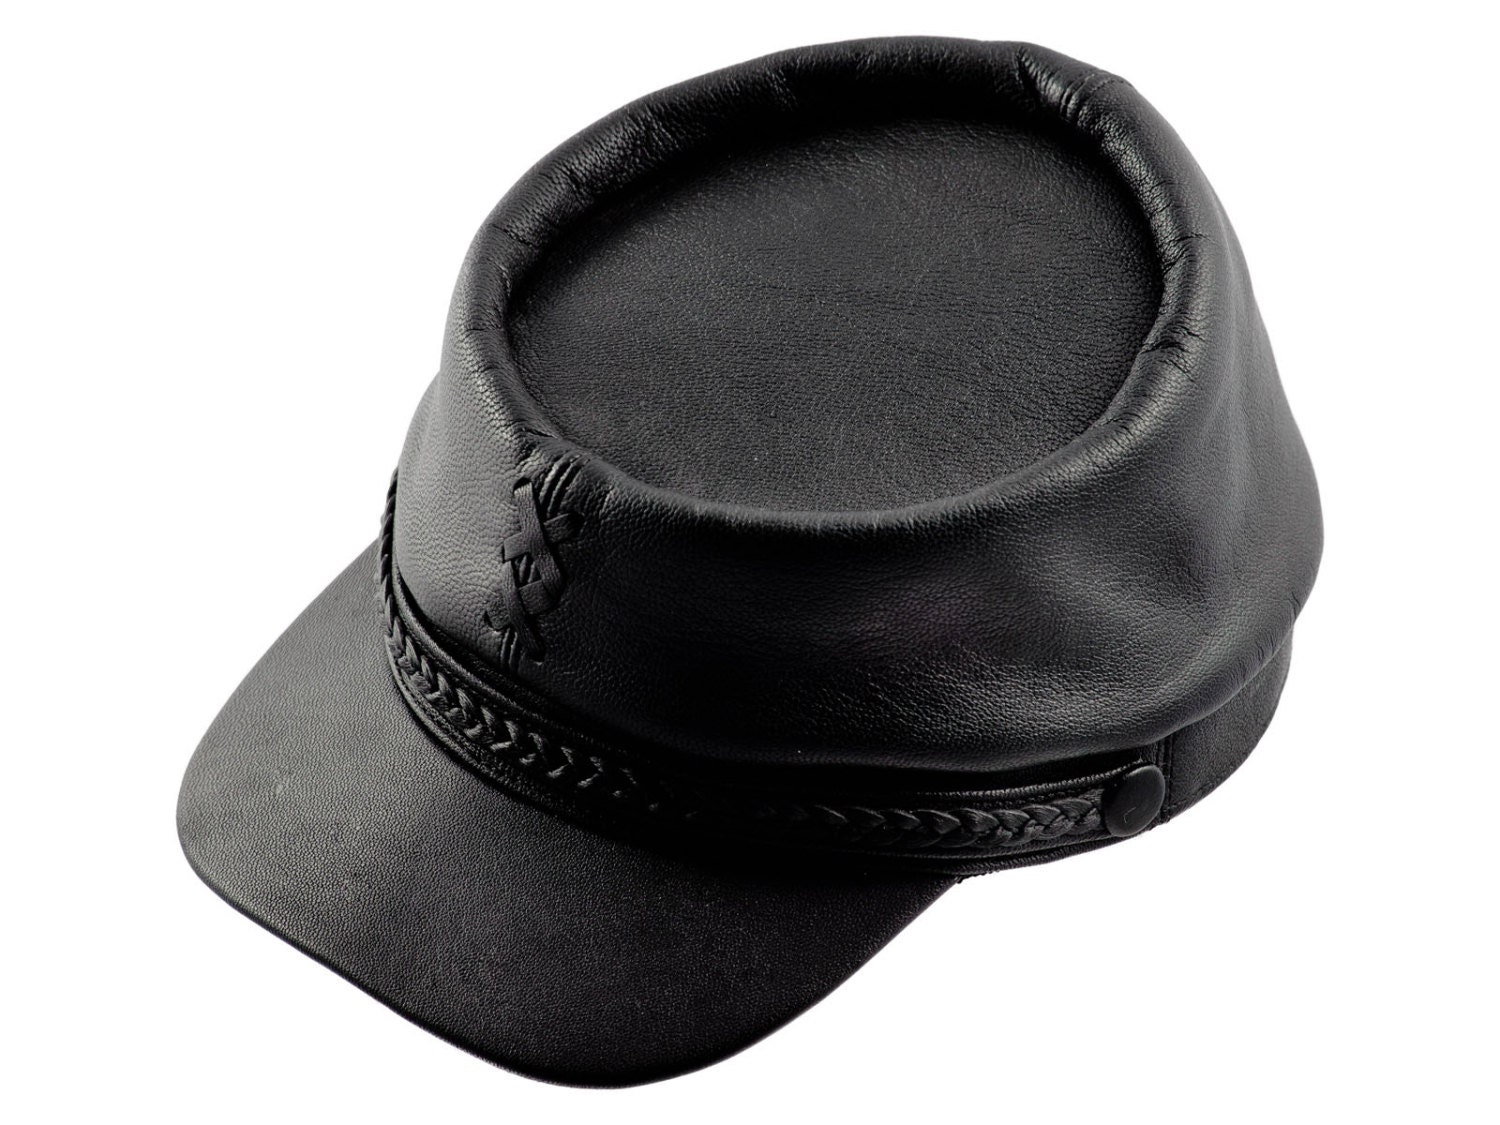 American Civil War genuine leather cap kepi style replica